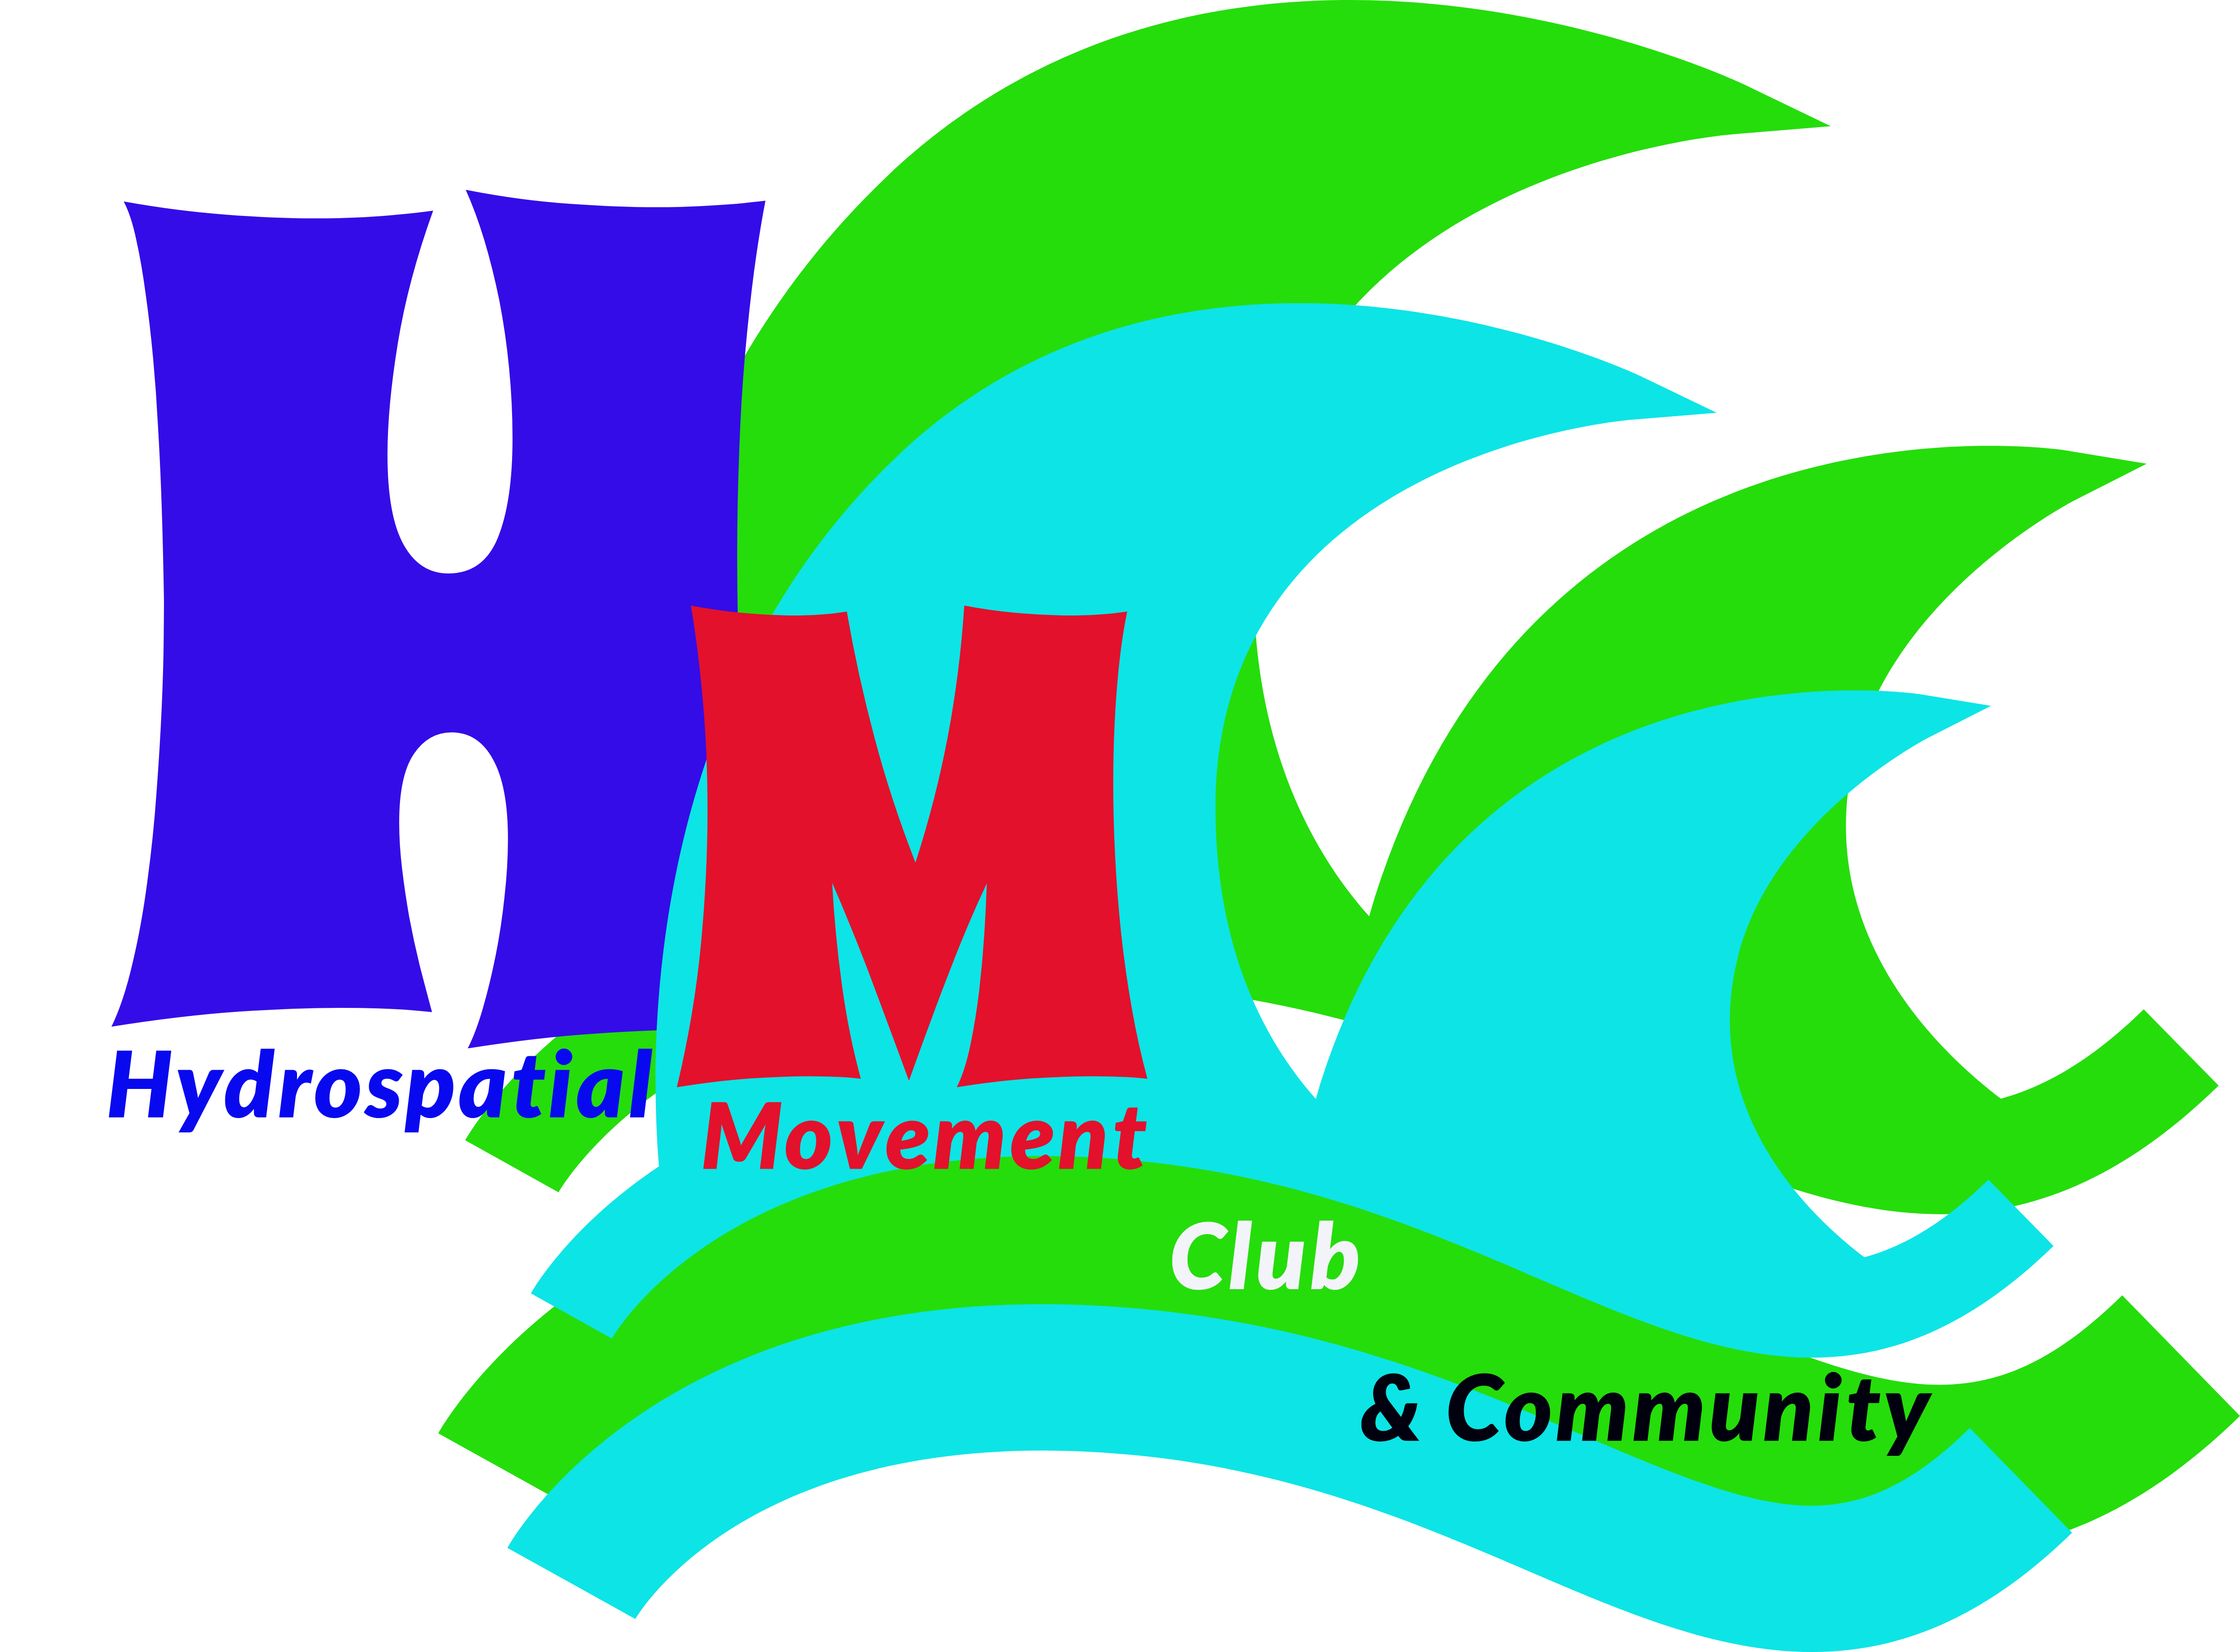 Figure2 for Long article HMCC Logo